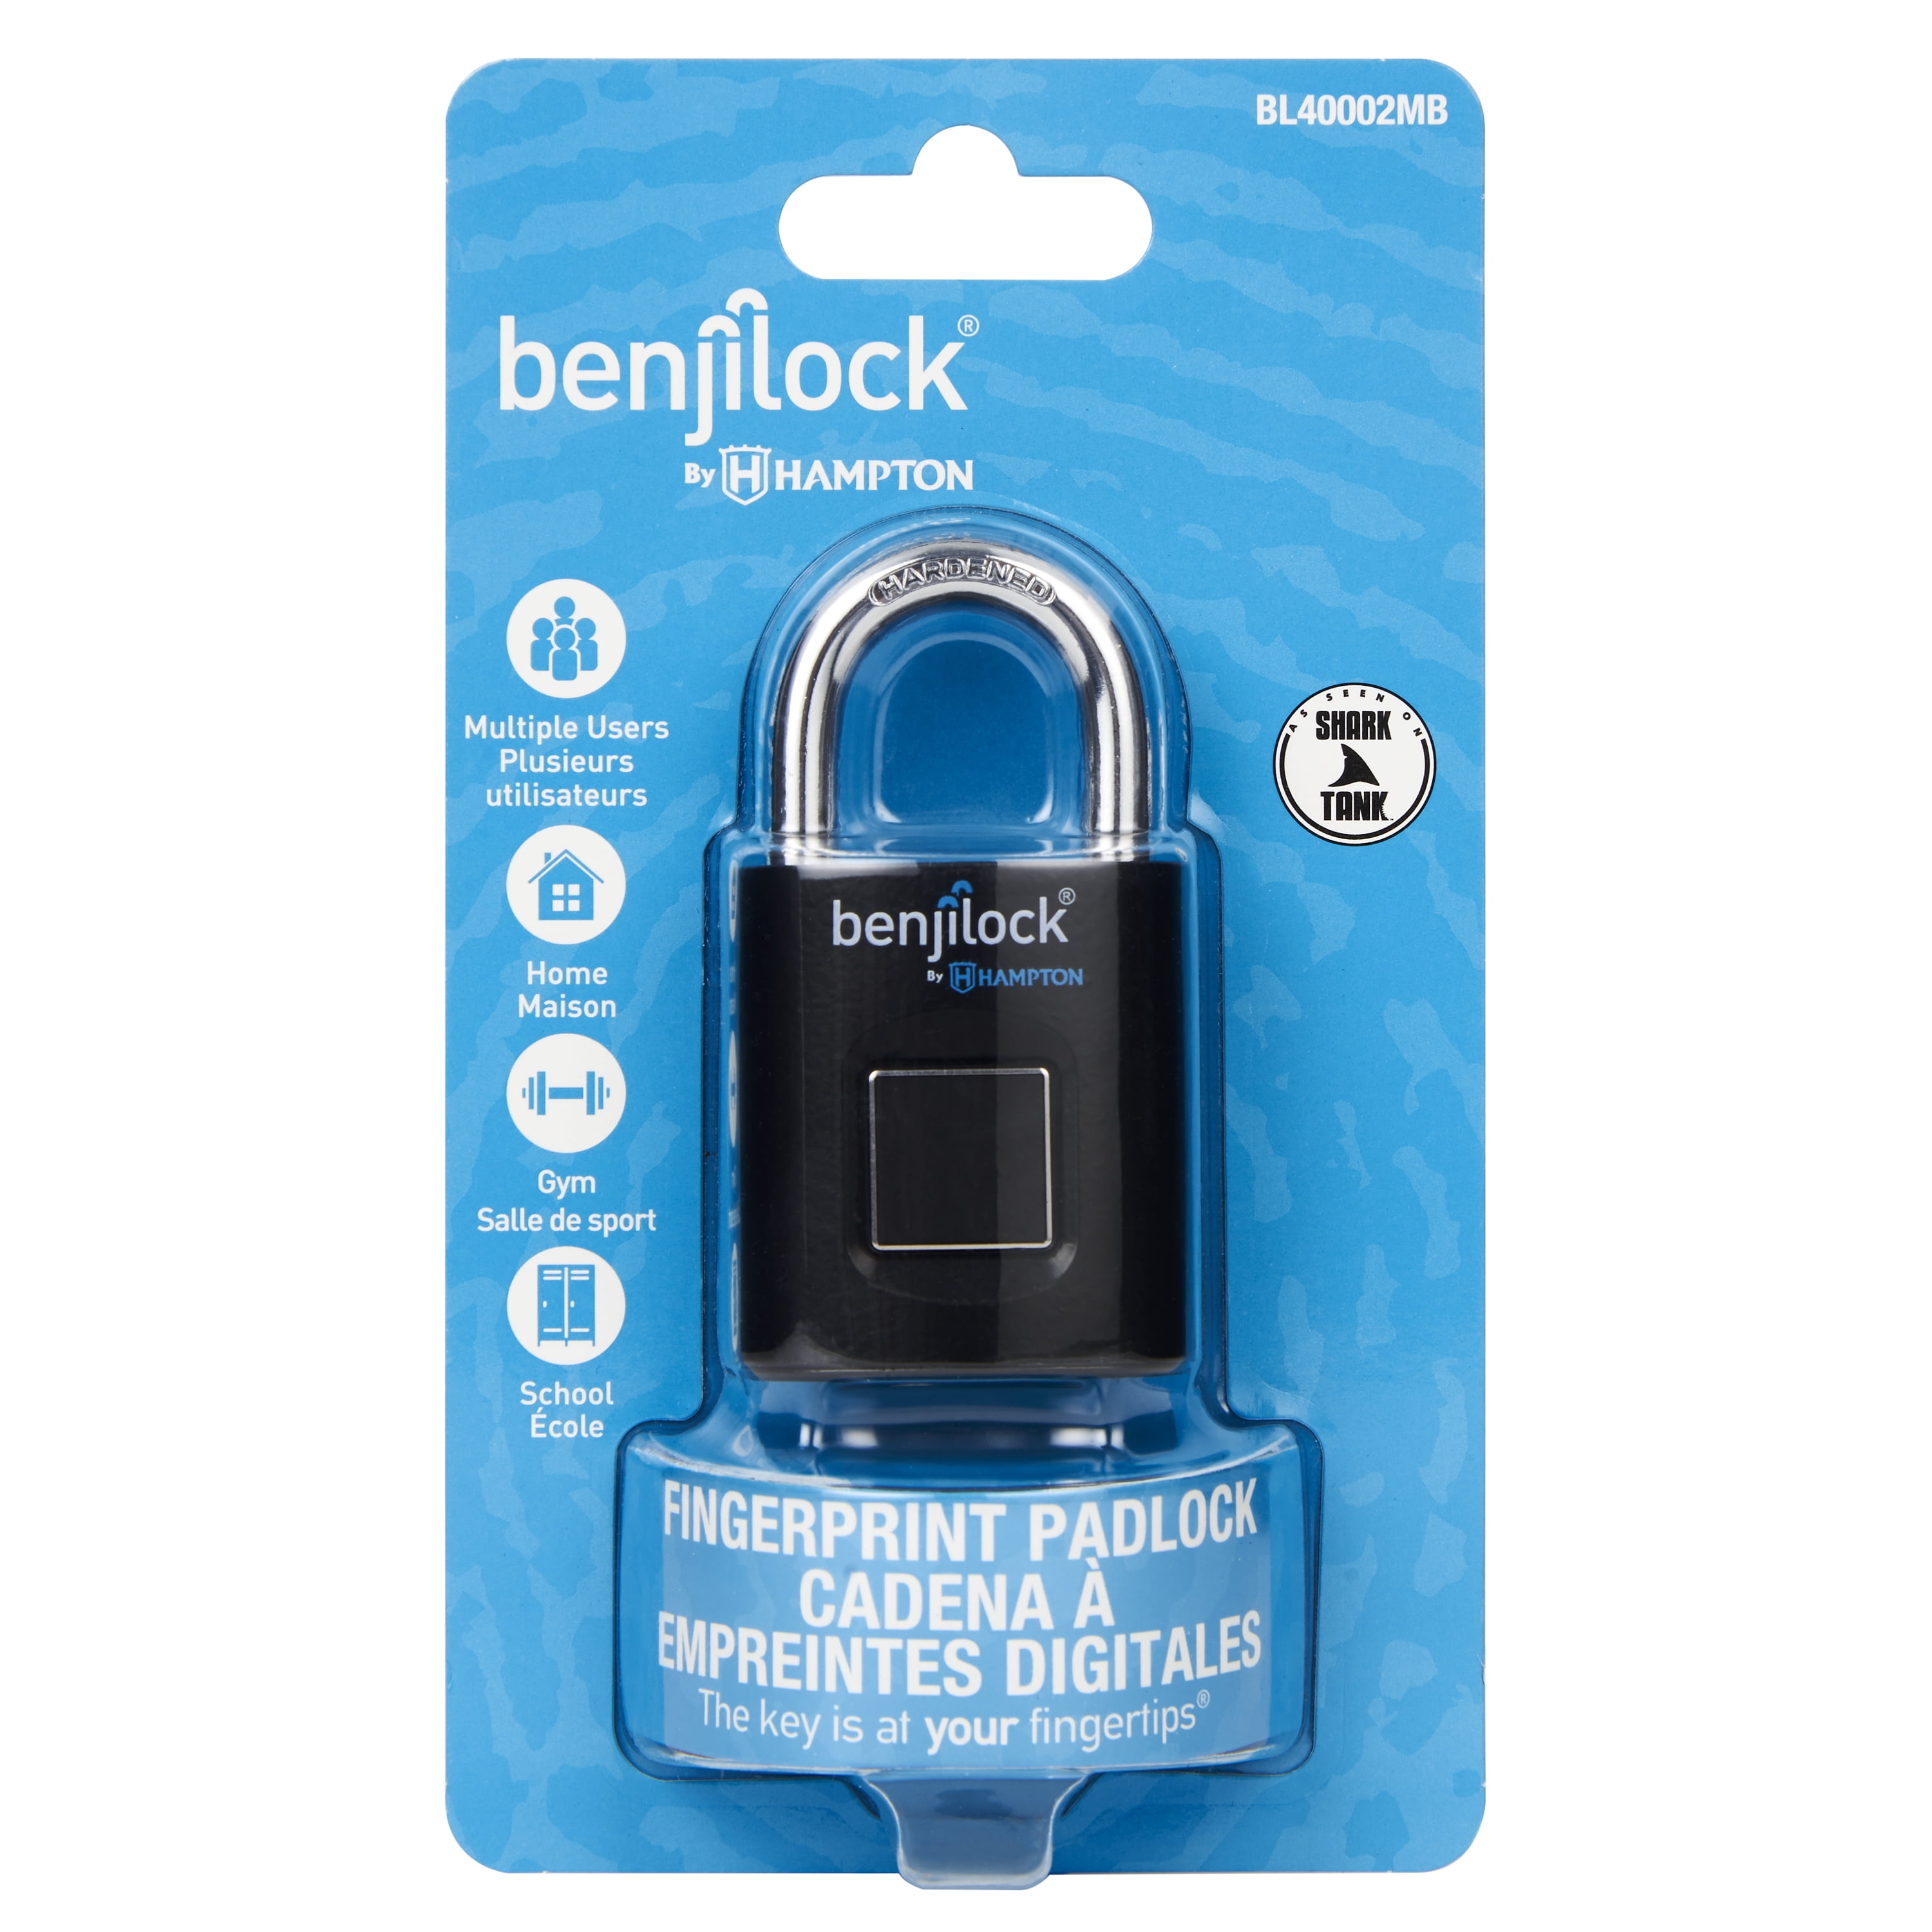 Benjilock Fingerprint Bike Lock review: Ditch the keys - Gearbrain